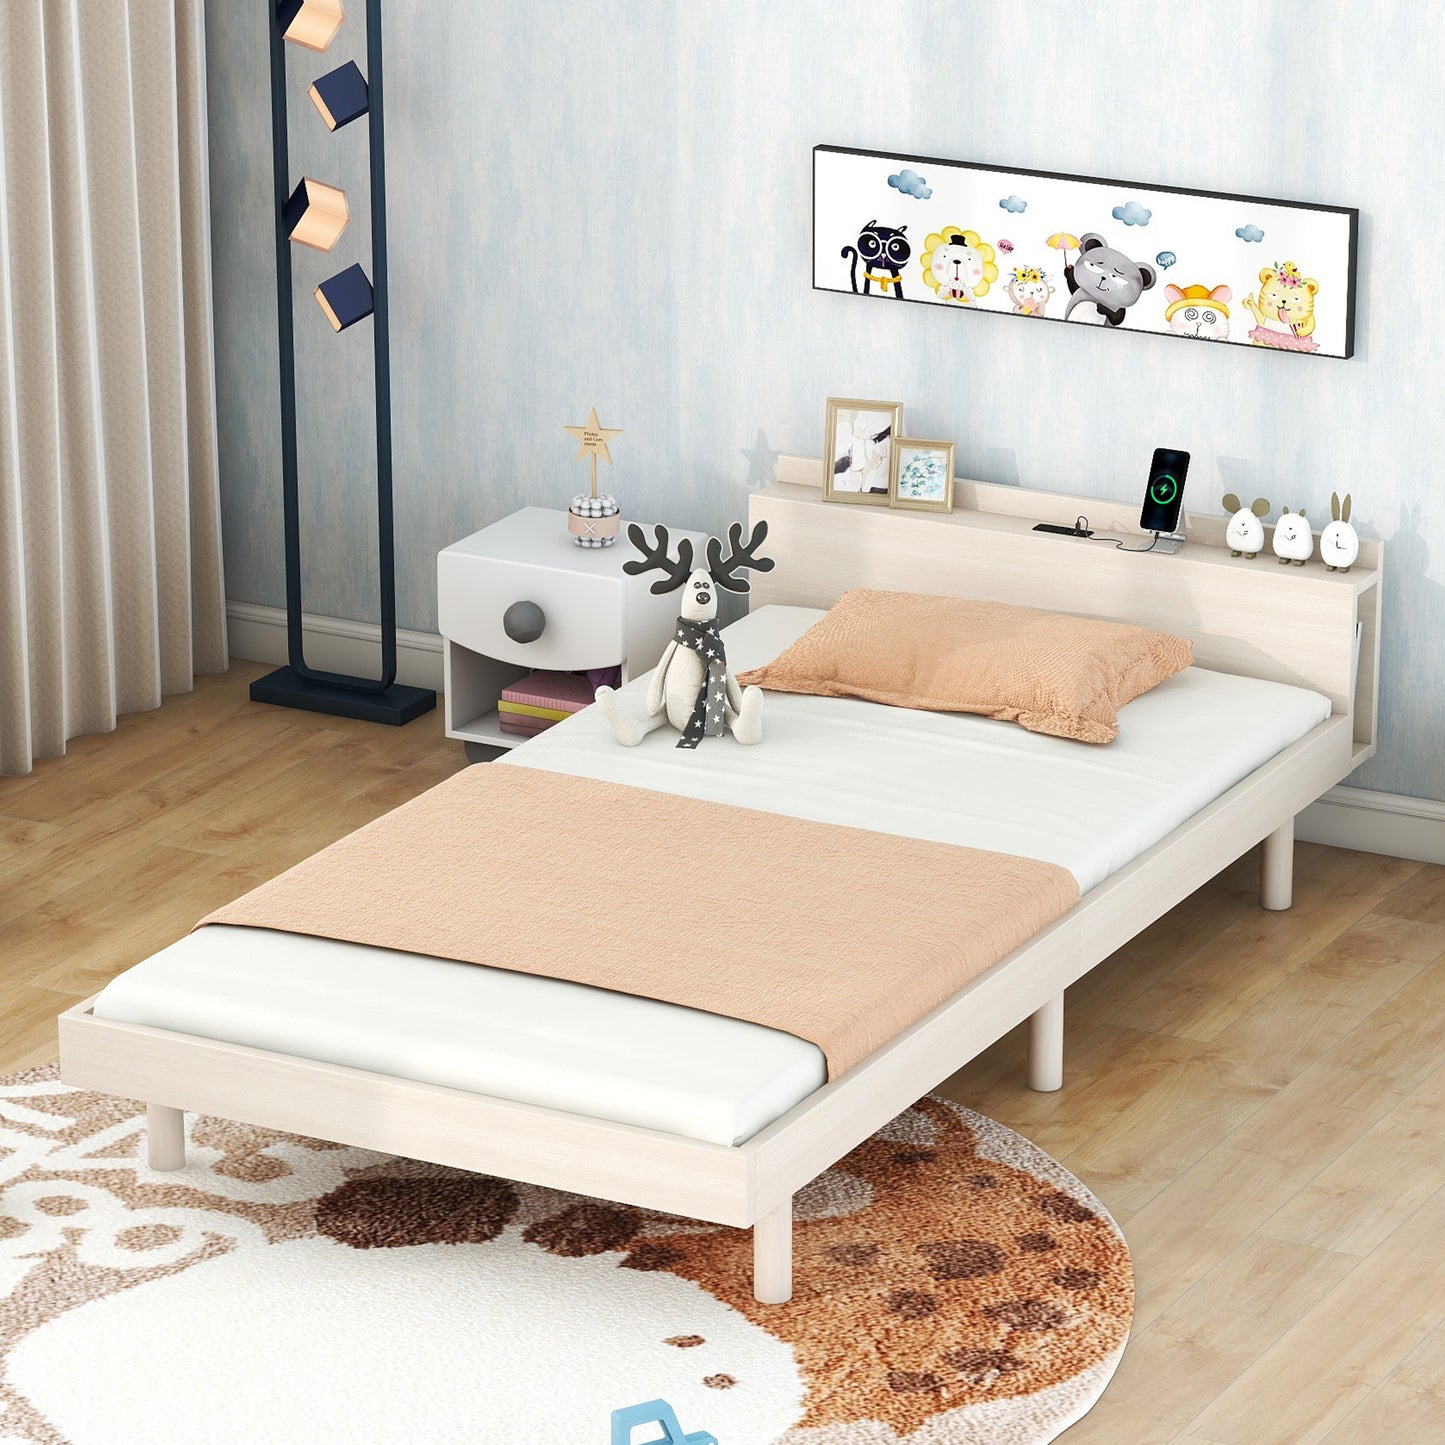 Modern Design Twin Size Platform Bed Frame with USB Ports for White Washed Color